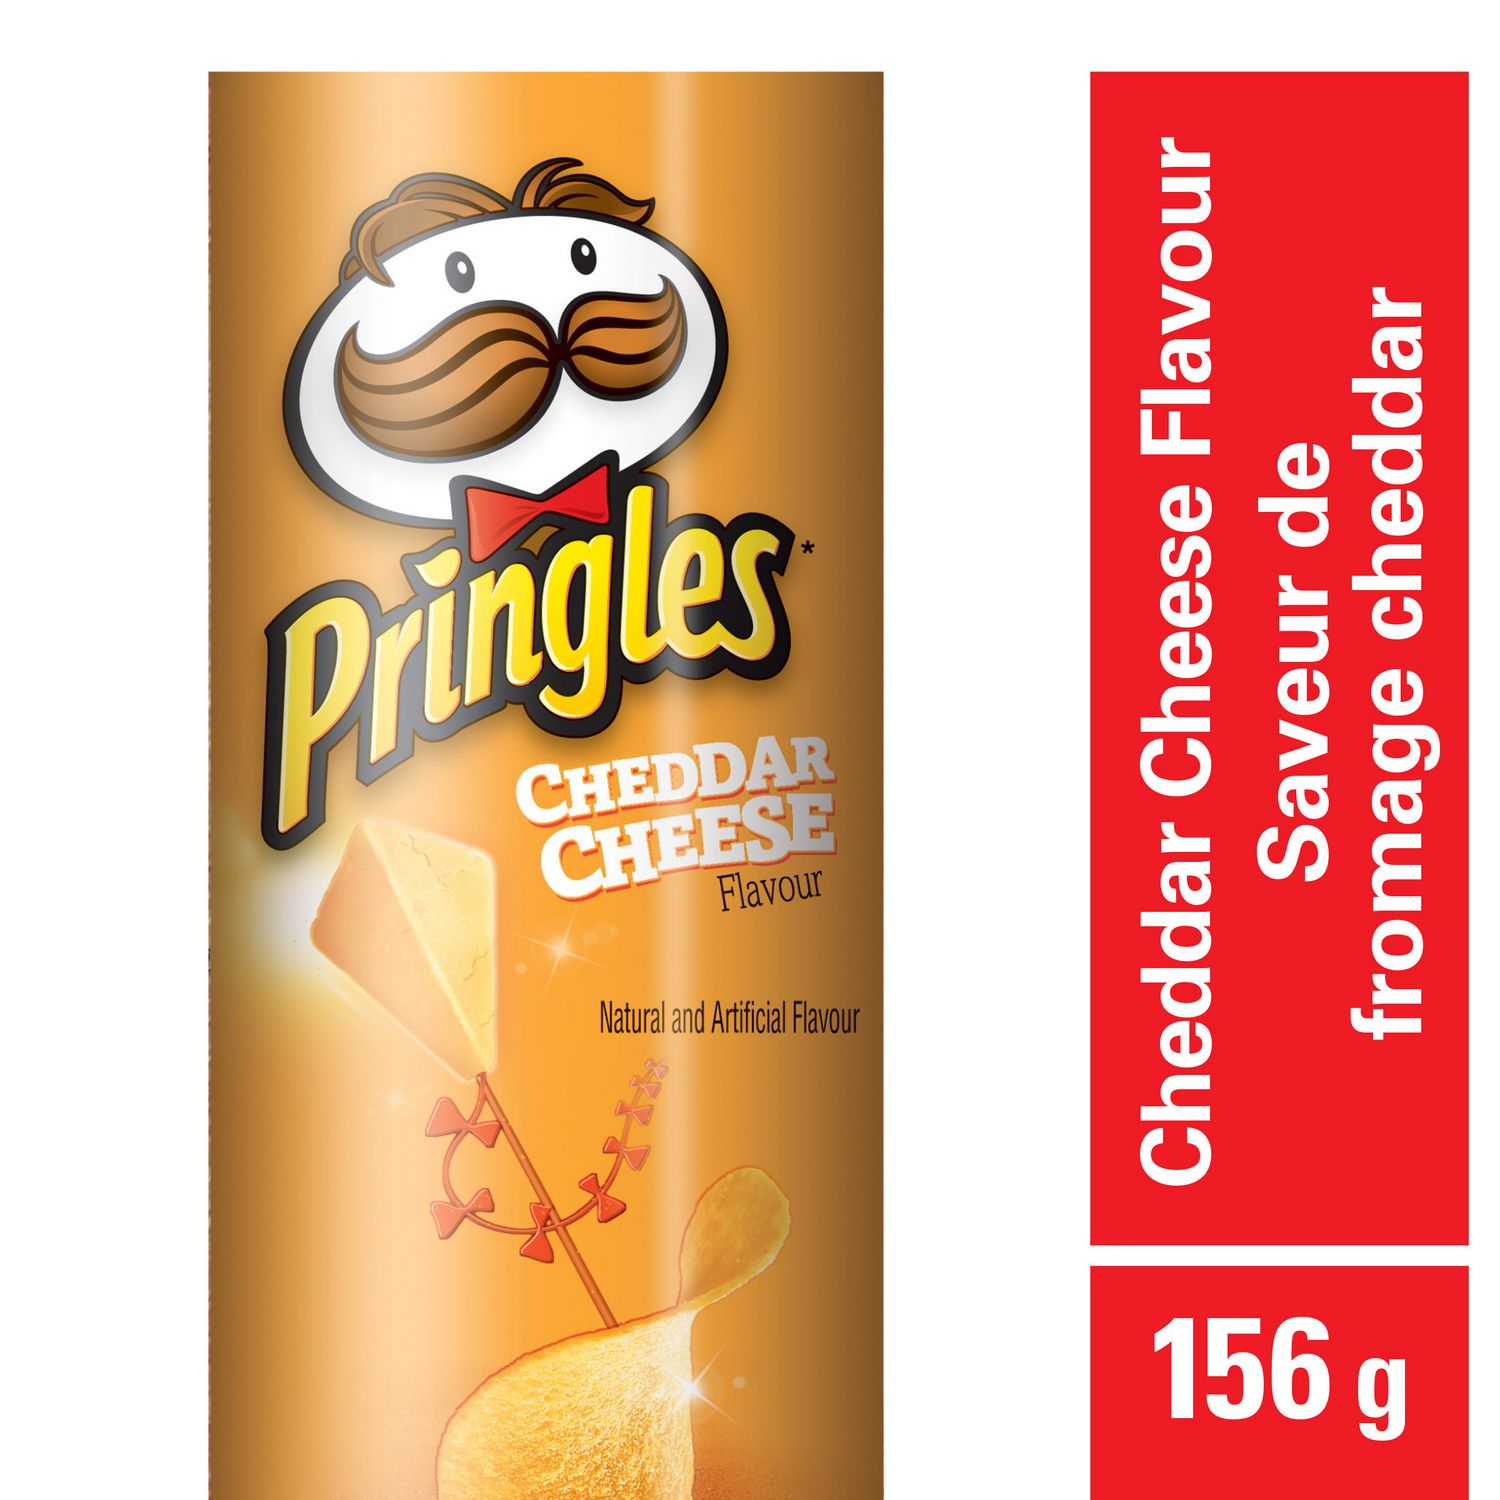 Pringles Cheddar Cheese Flavour Potato Chips 156 G | Walmart Canada